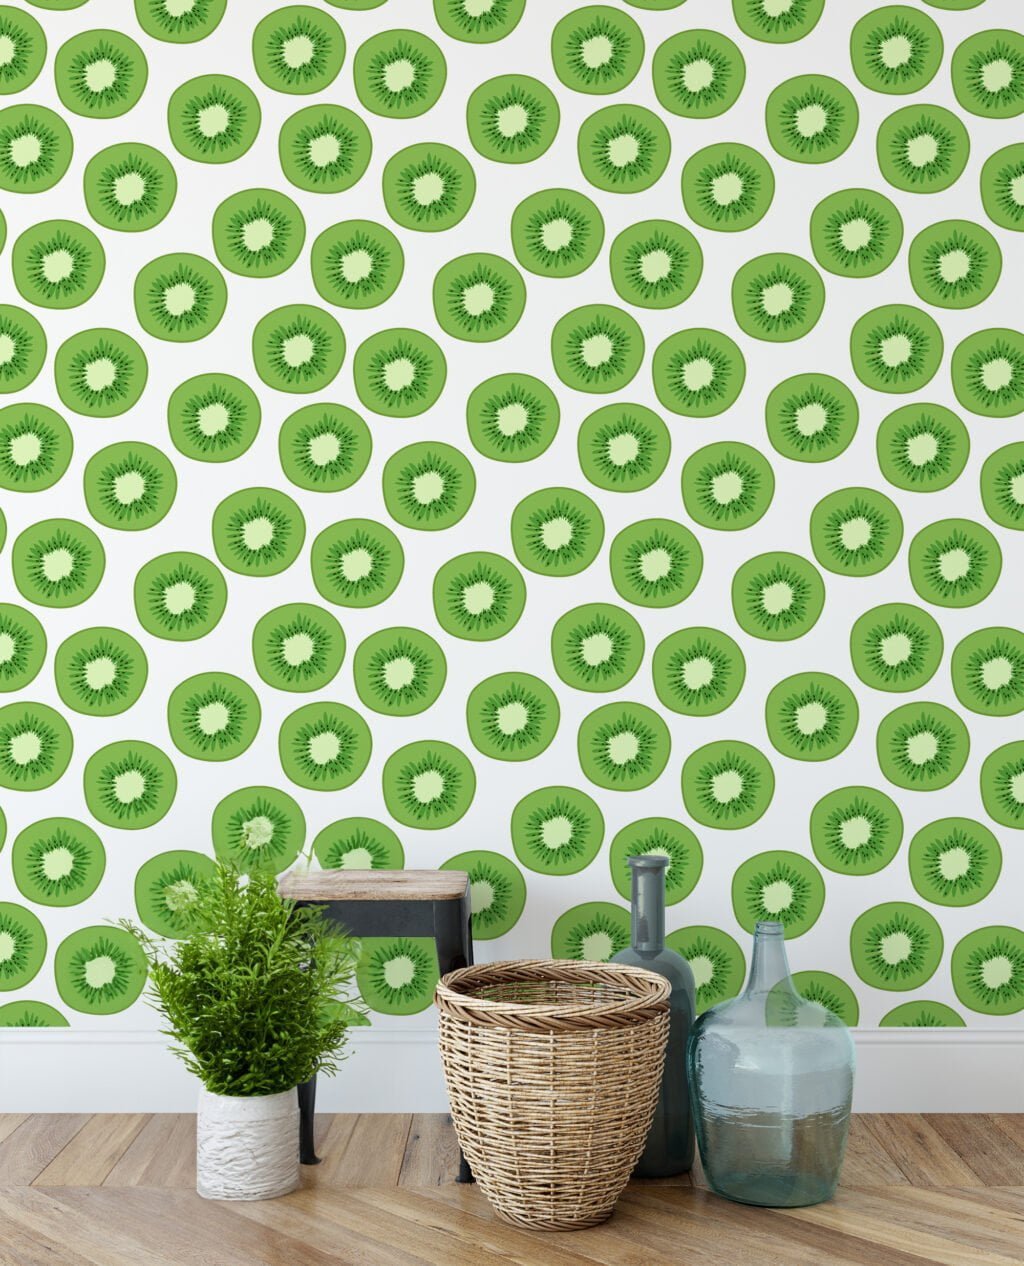 Kiwi Slices Illustration Wallpaper, Vibrant Green Kitchen Decor Peel & Stick Wall Mural